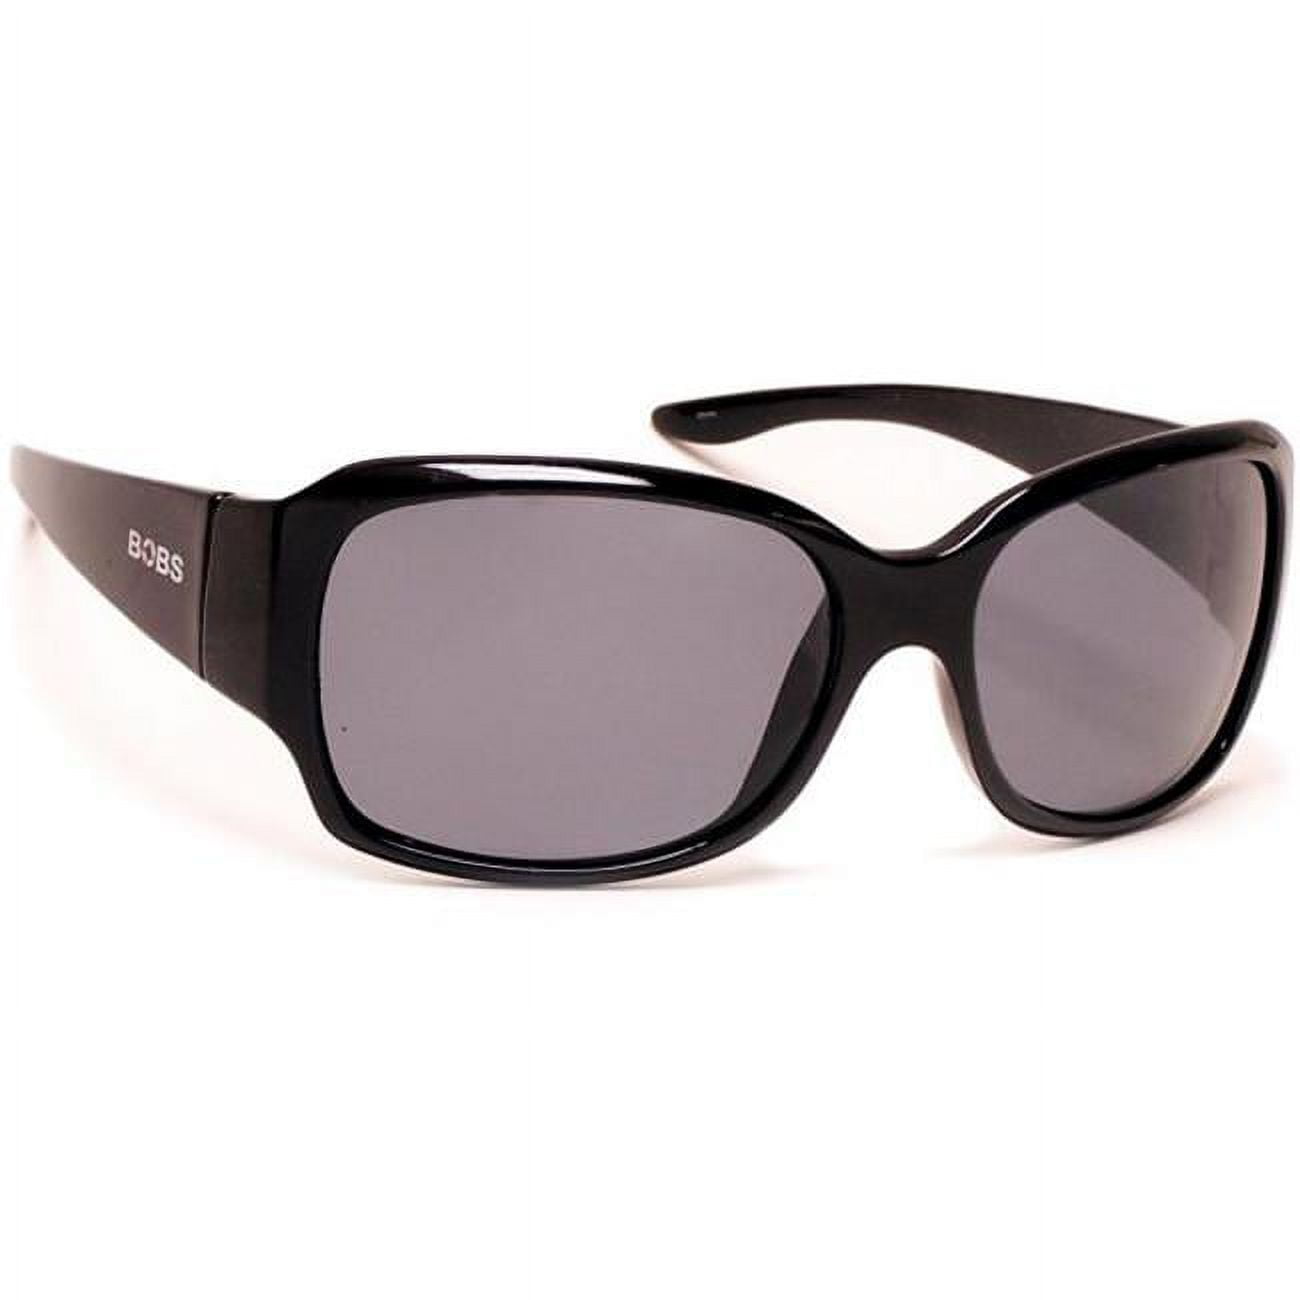 3 Pcs Floating Sunglass Strap | Float your Sunglasses and Glasses |  Neoprene Adjustable Eyewear Retainer - Walmart.com